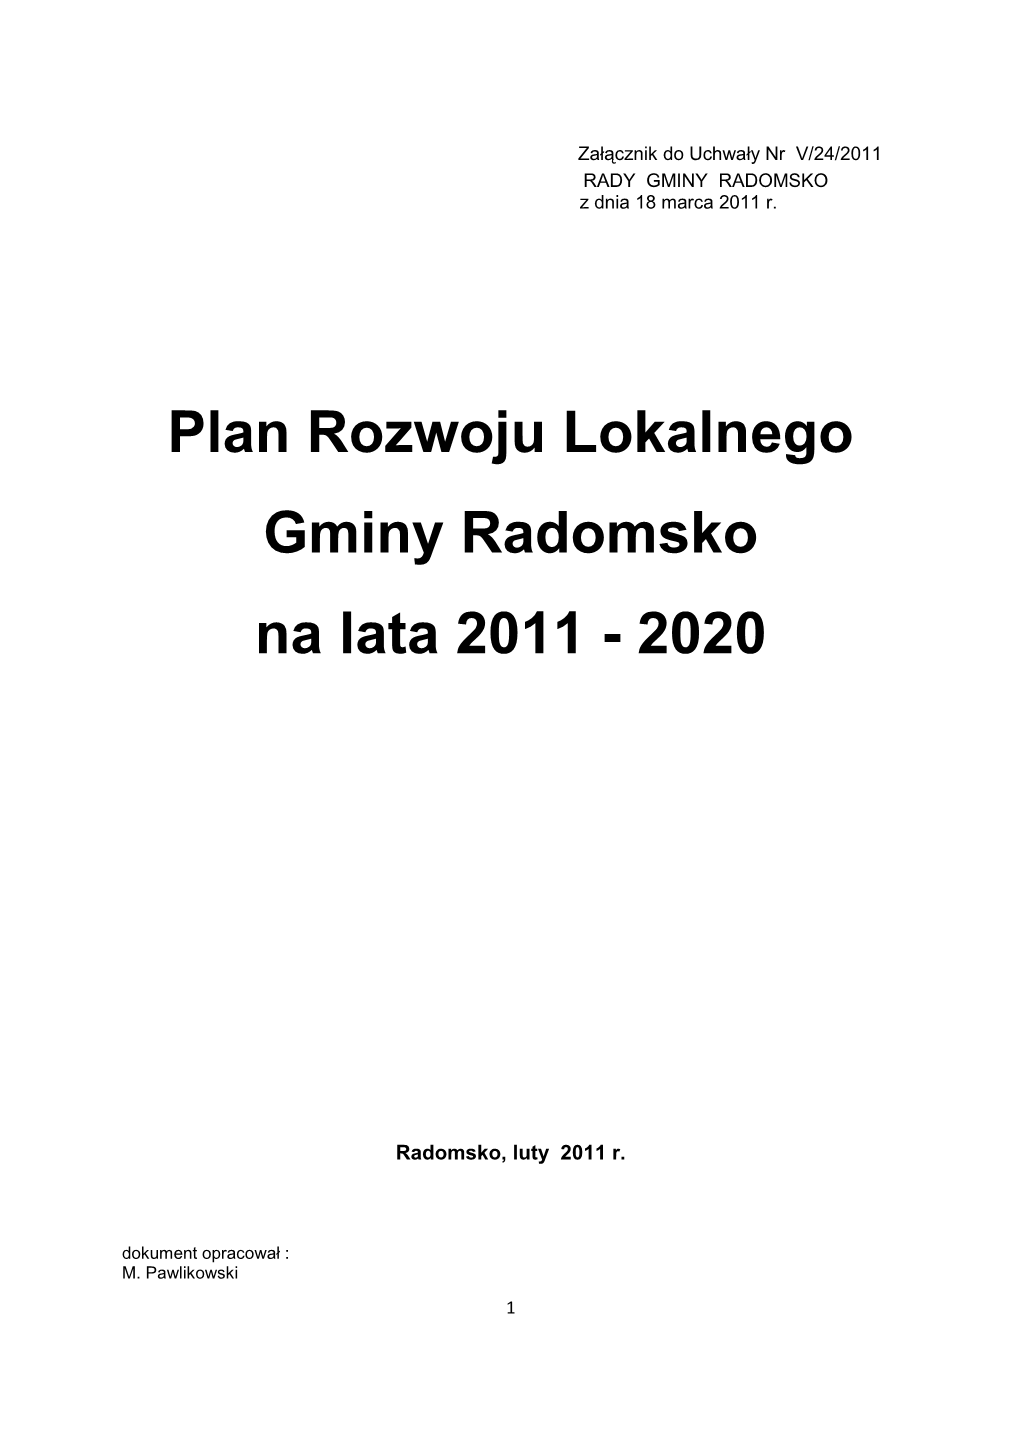 Plan Rozwoju Lokalnego Gminy Radomsko Na Lata 2011 - 2020